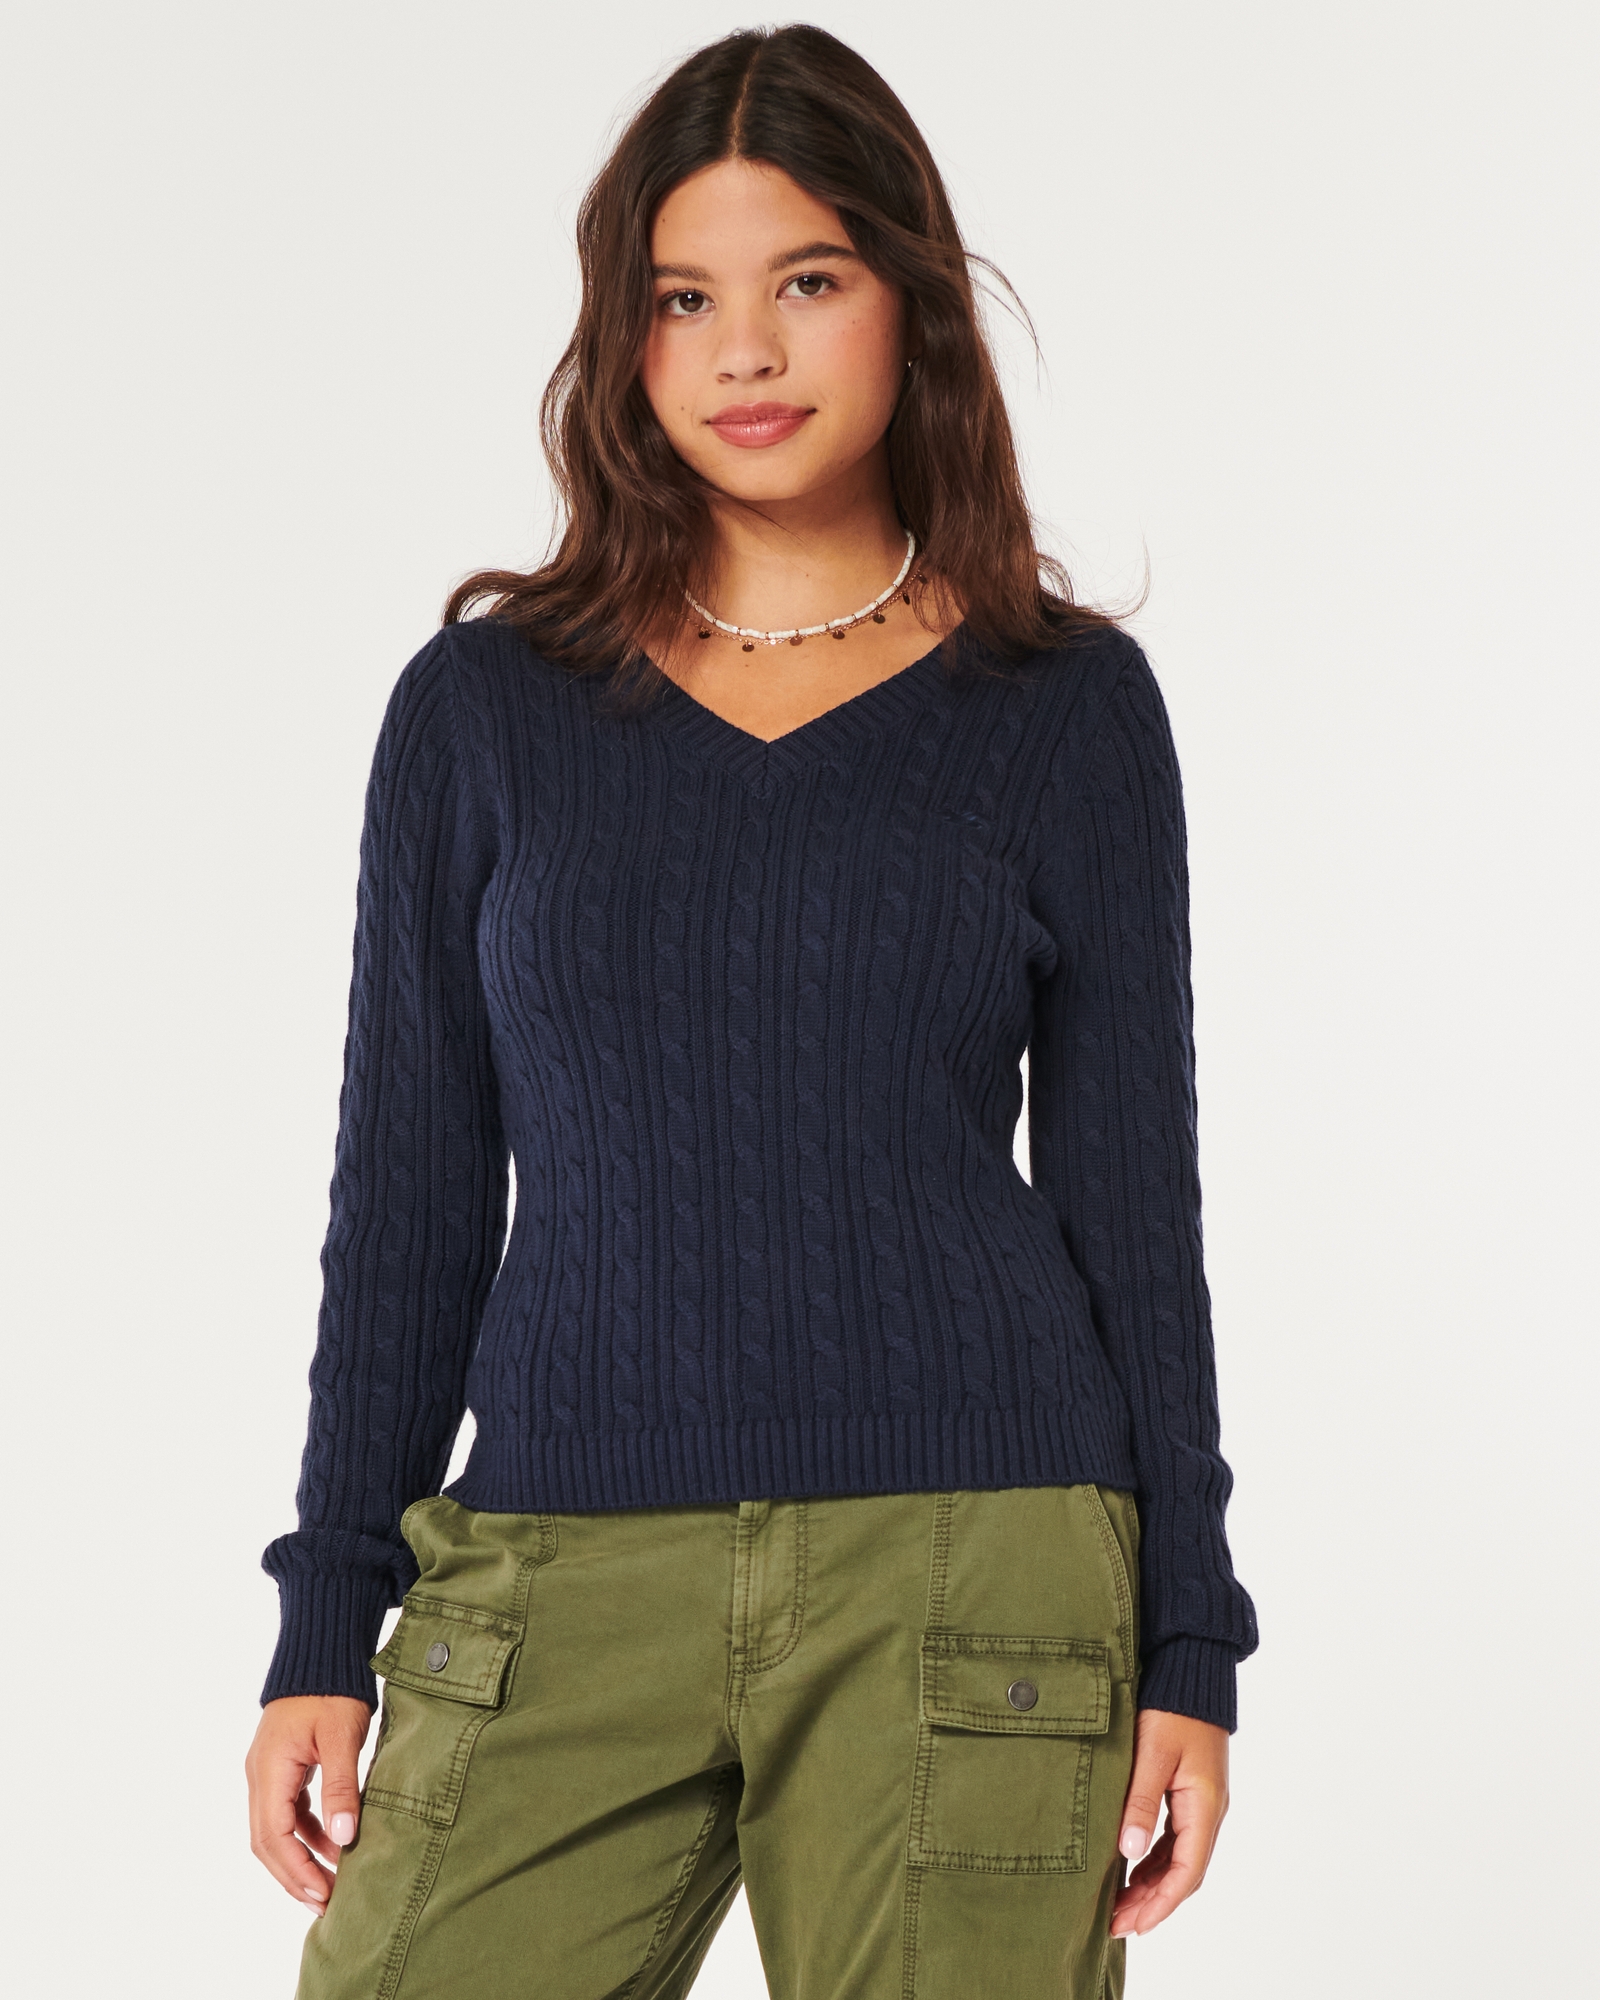 Hollister Sweater Sweaters - Buy Hollister Sweater Sweaters online